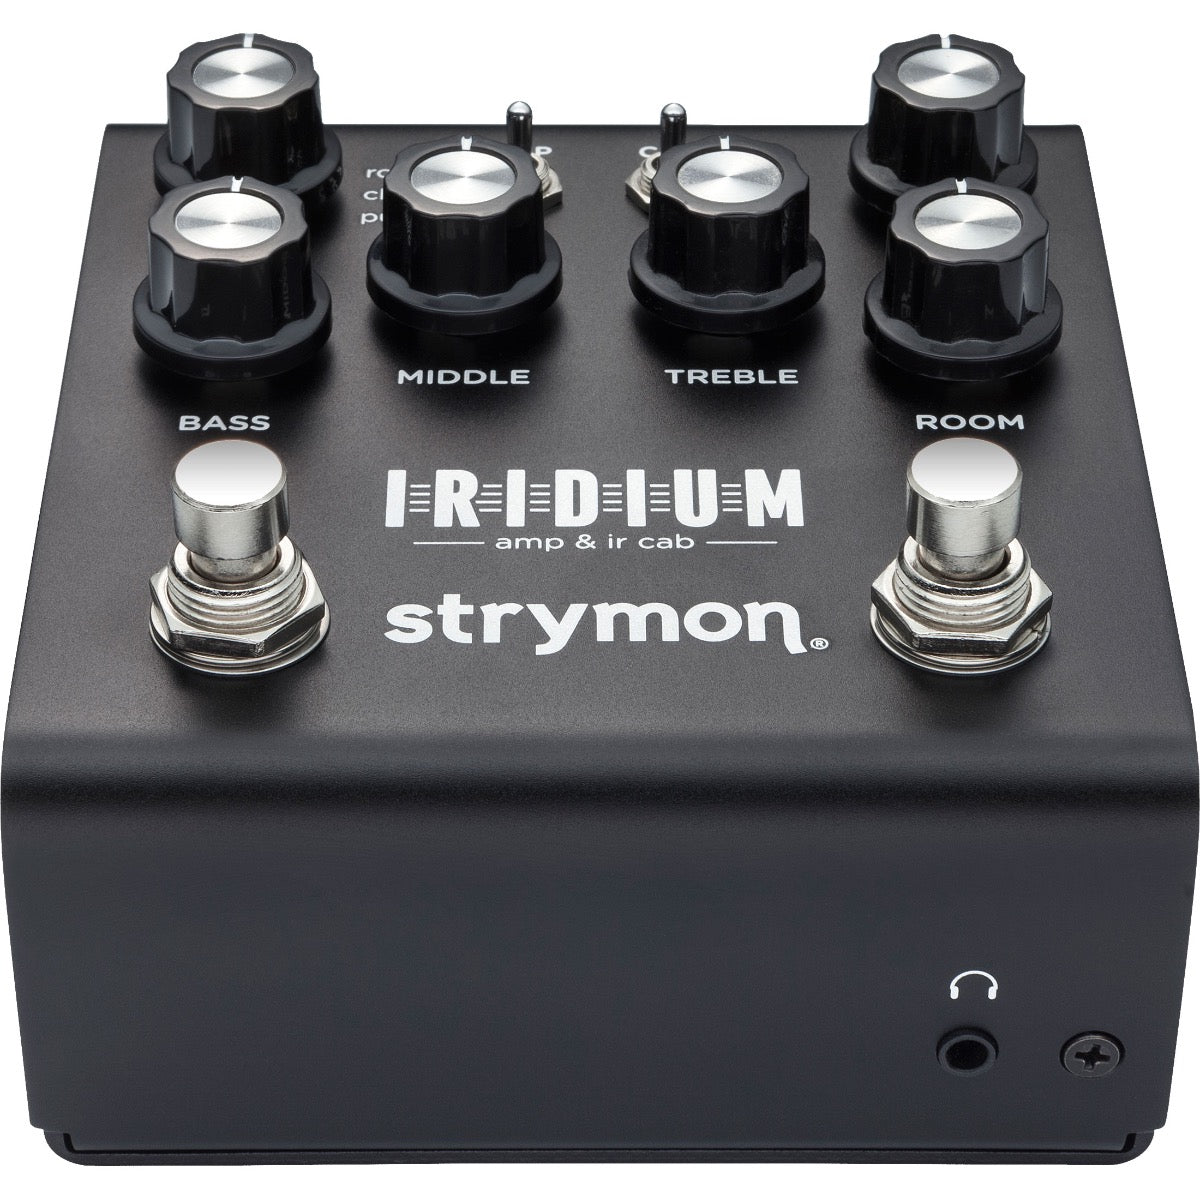 Strymon Iridium Amp Modeler & Impulse Response Cabinet Pedal, View 3